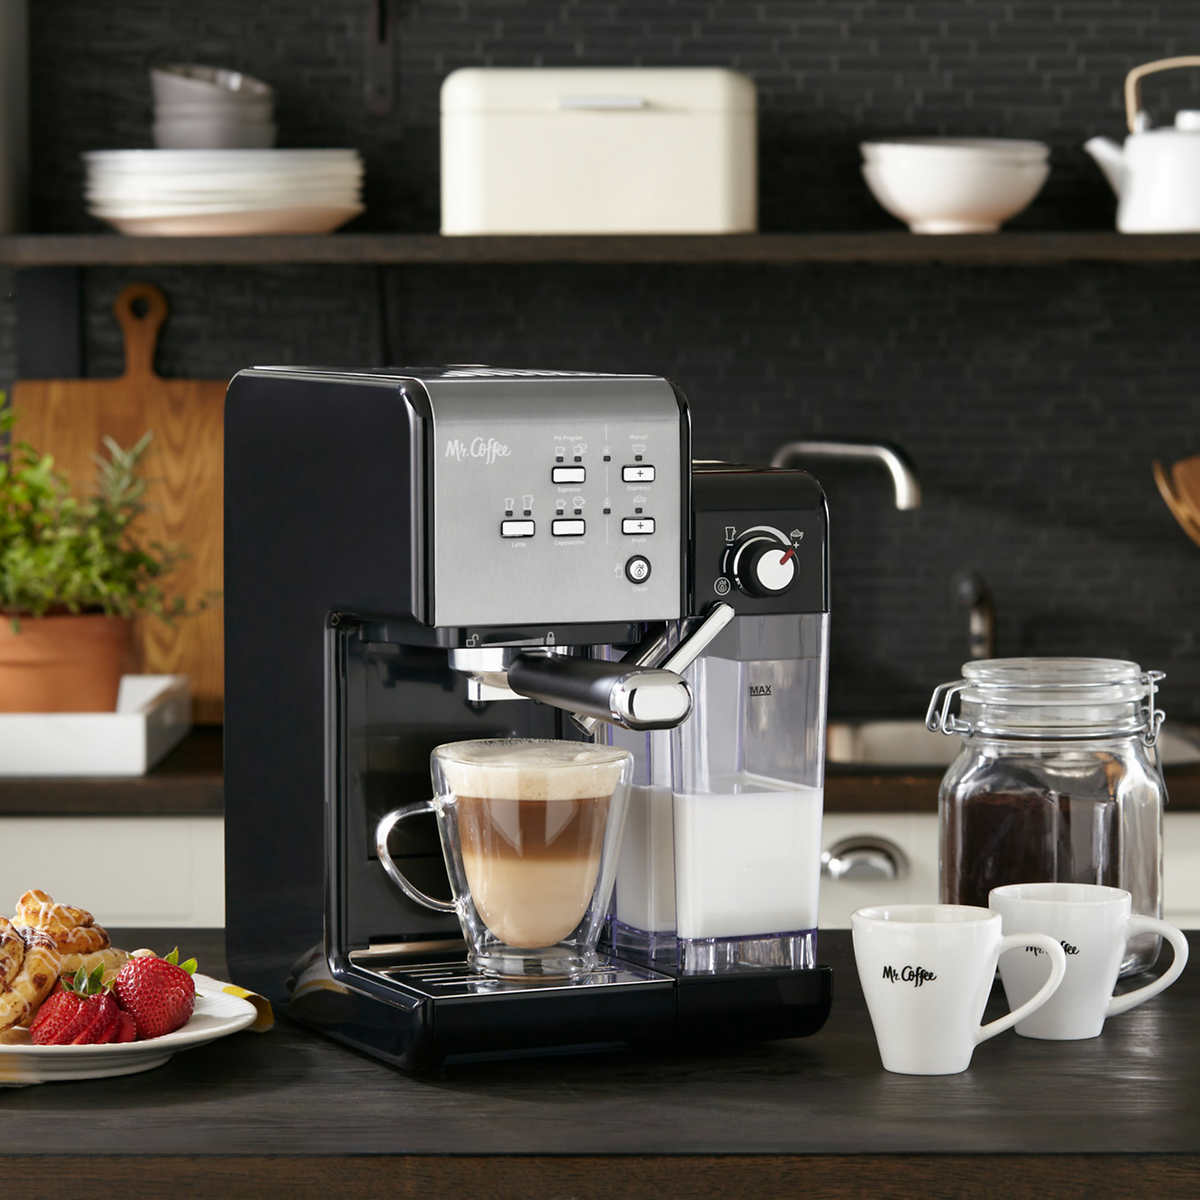 Mr. Coffee Programmable Espresso, Cappuccino, Coffee Maker With